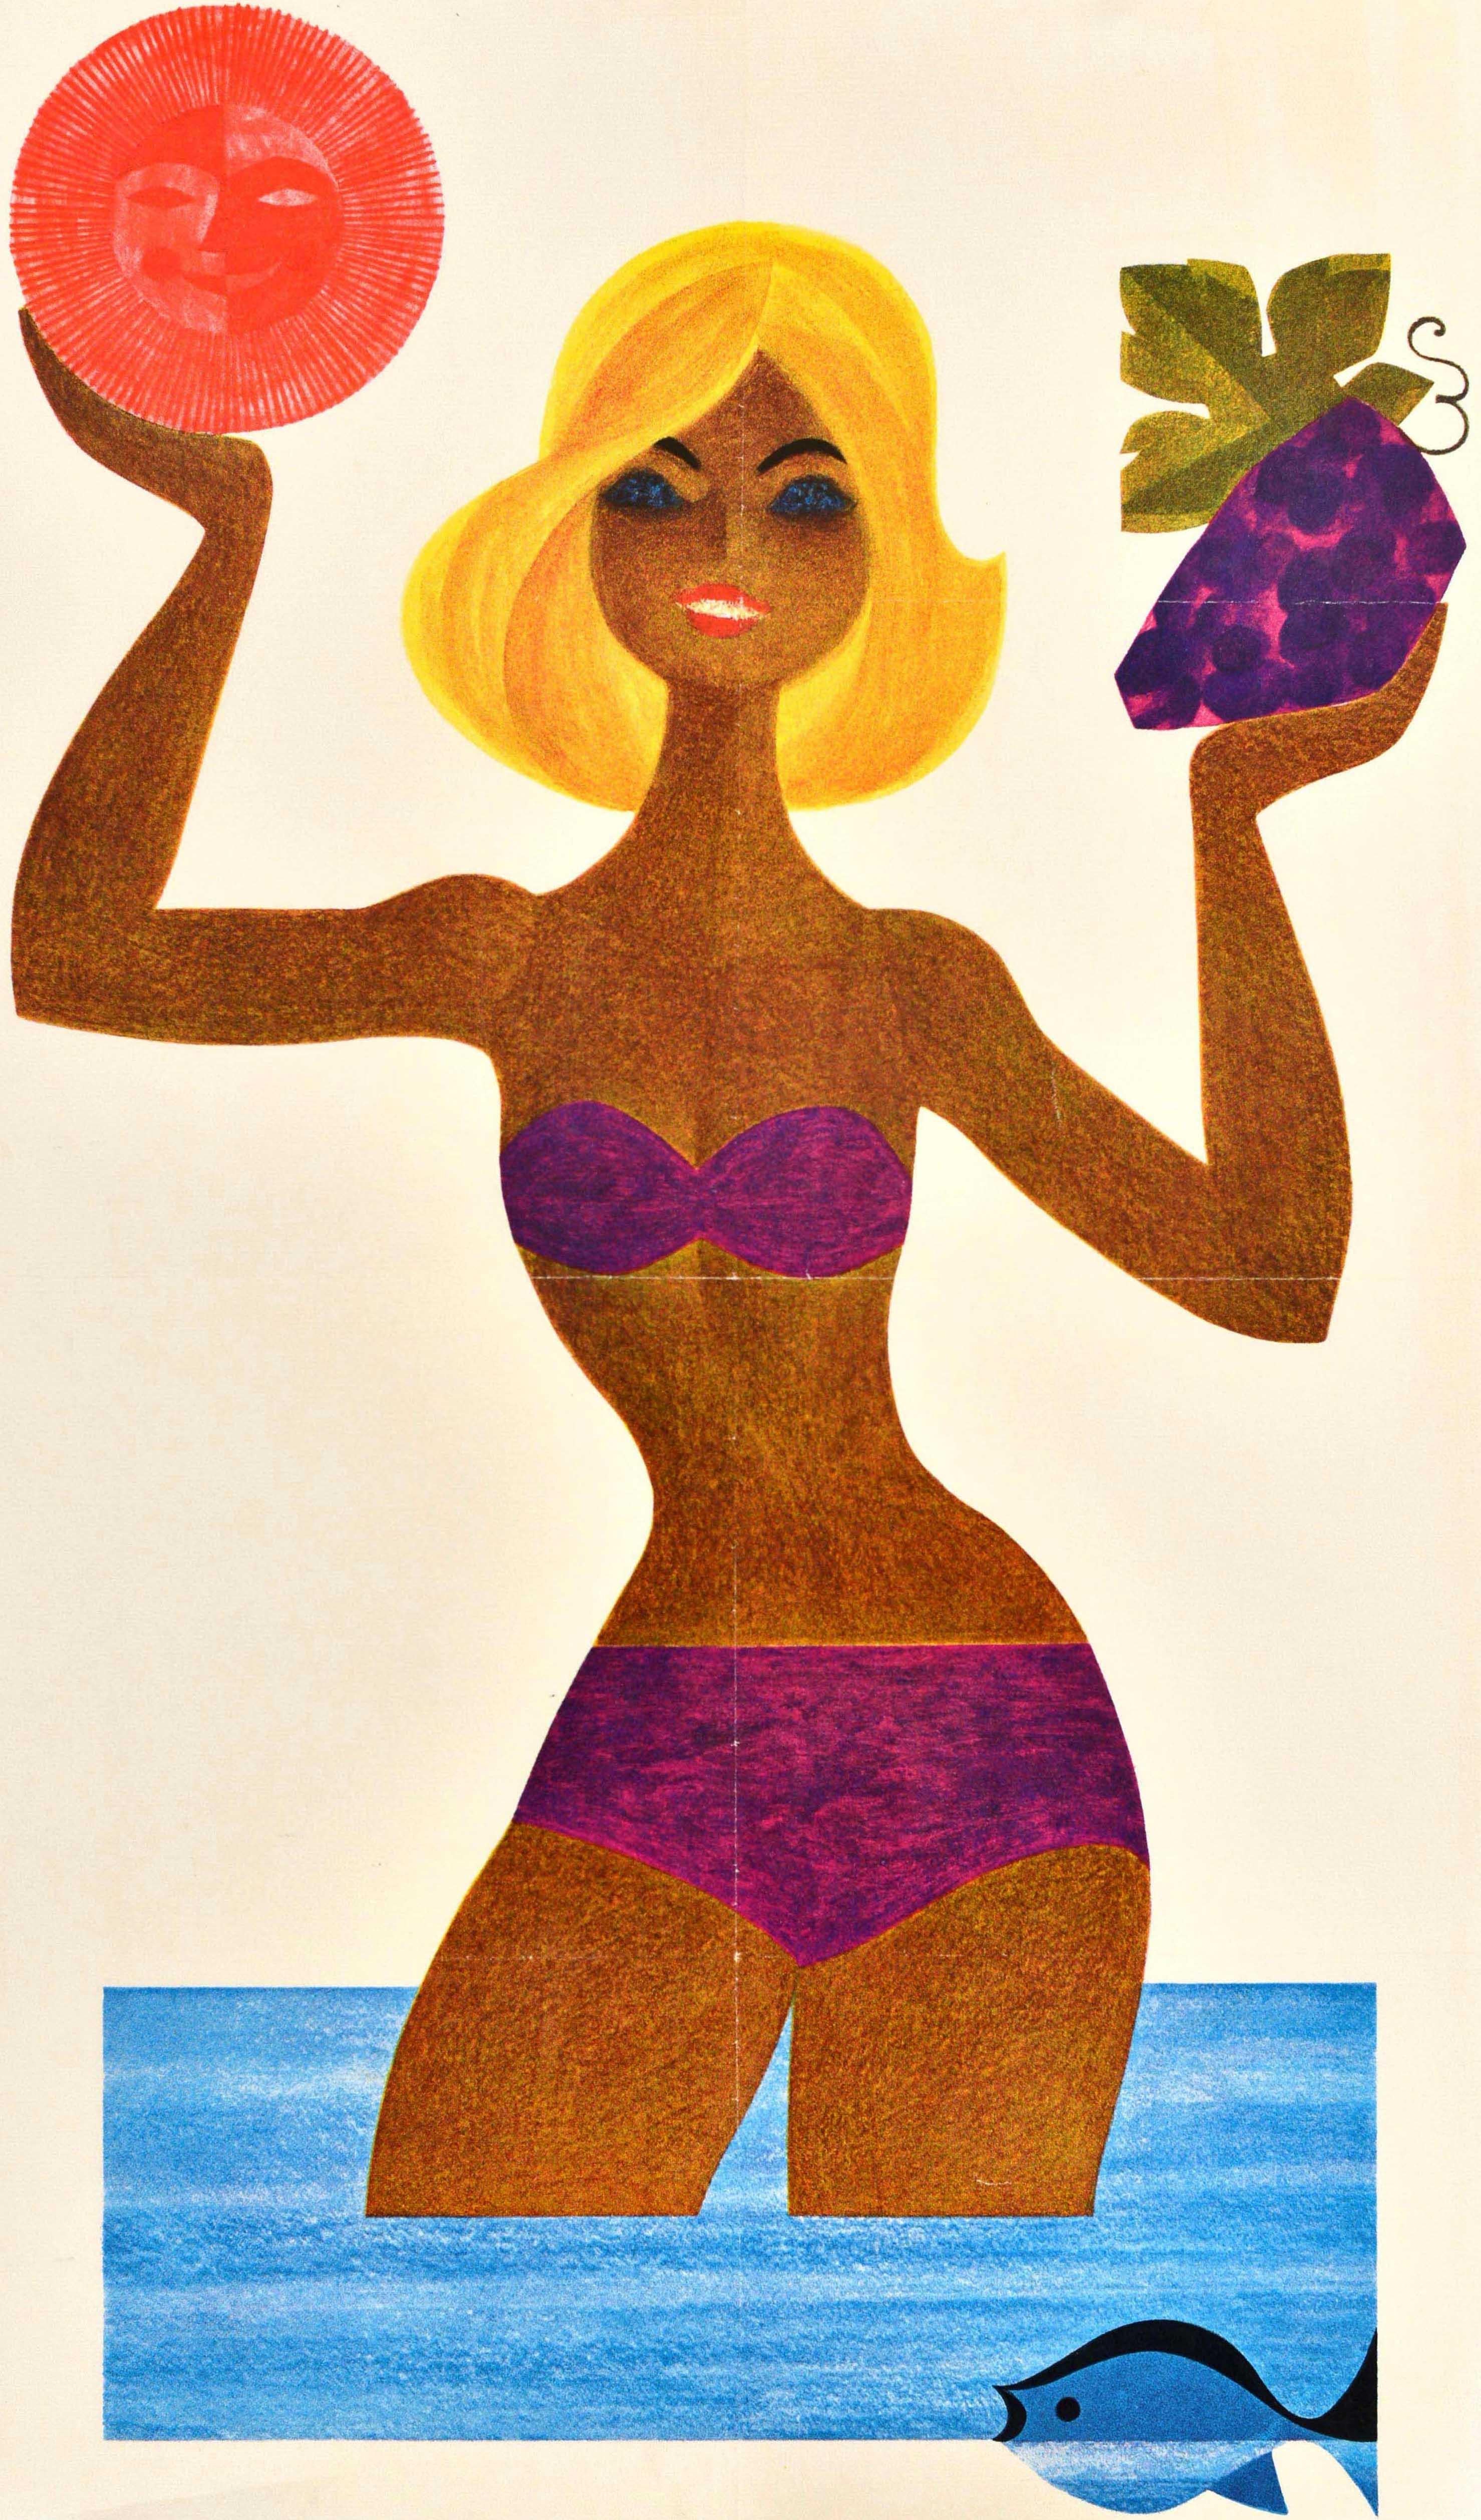 Original Vintage Soviet Travel Poster Intourist Yalta Sochi USSR Bikini Beach In Good Condition For Sale In London, GB